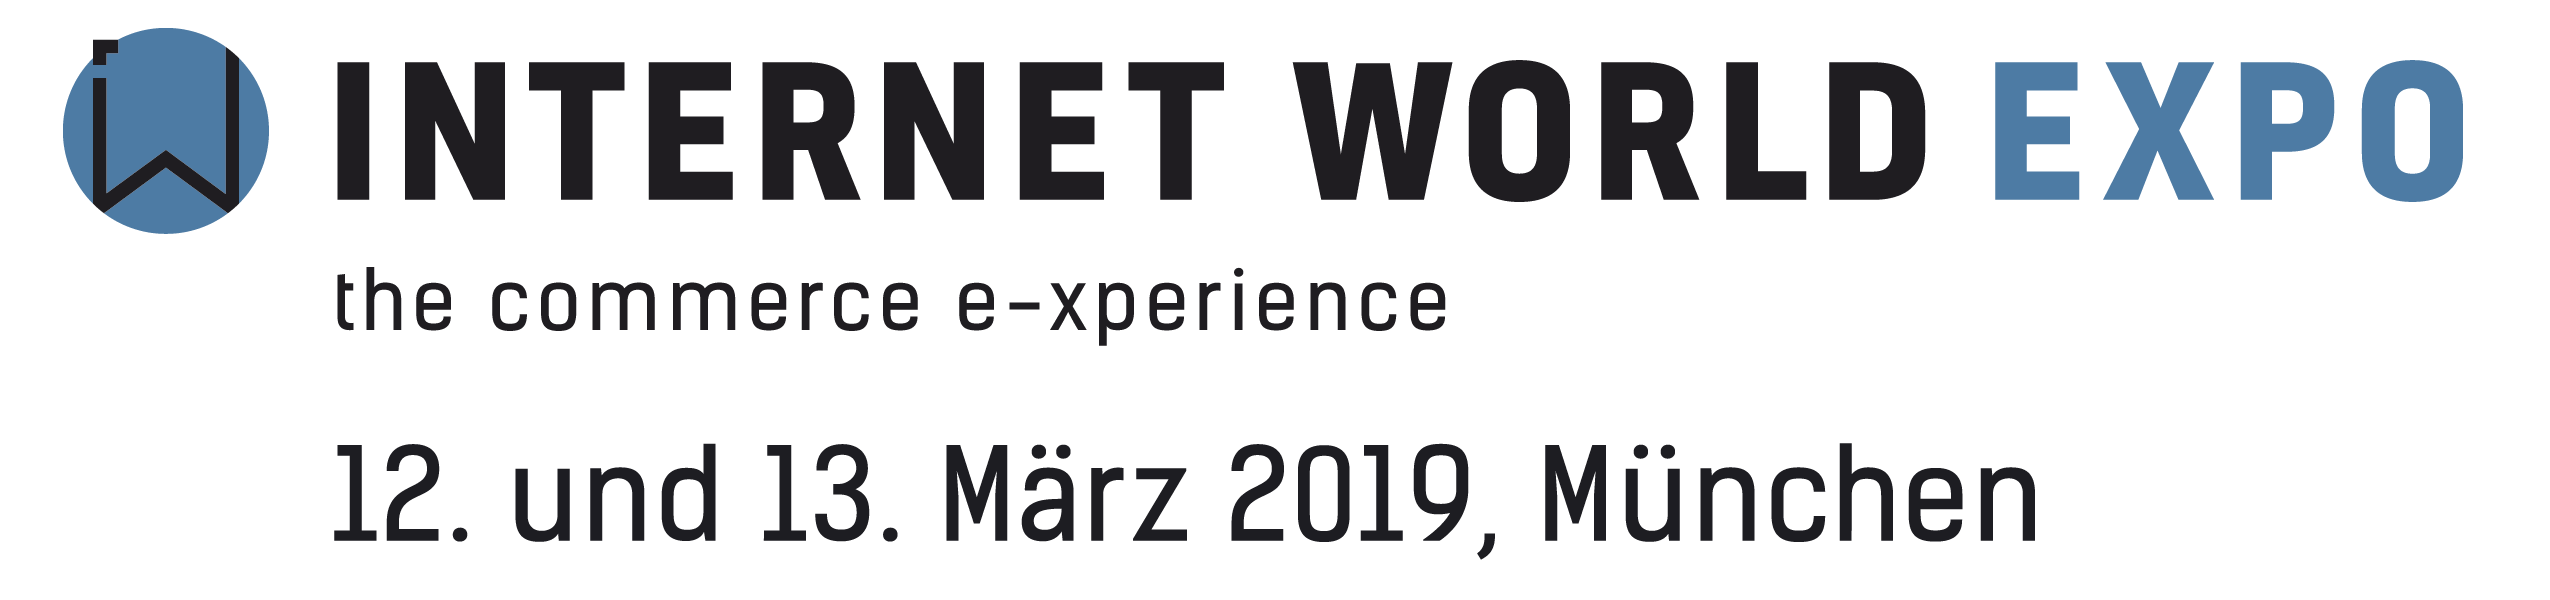 Internet World Expo 2019